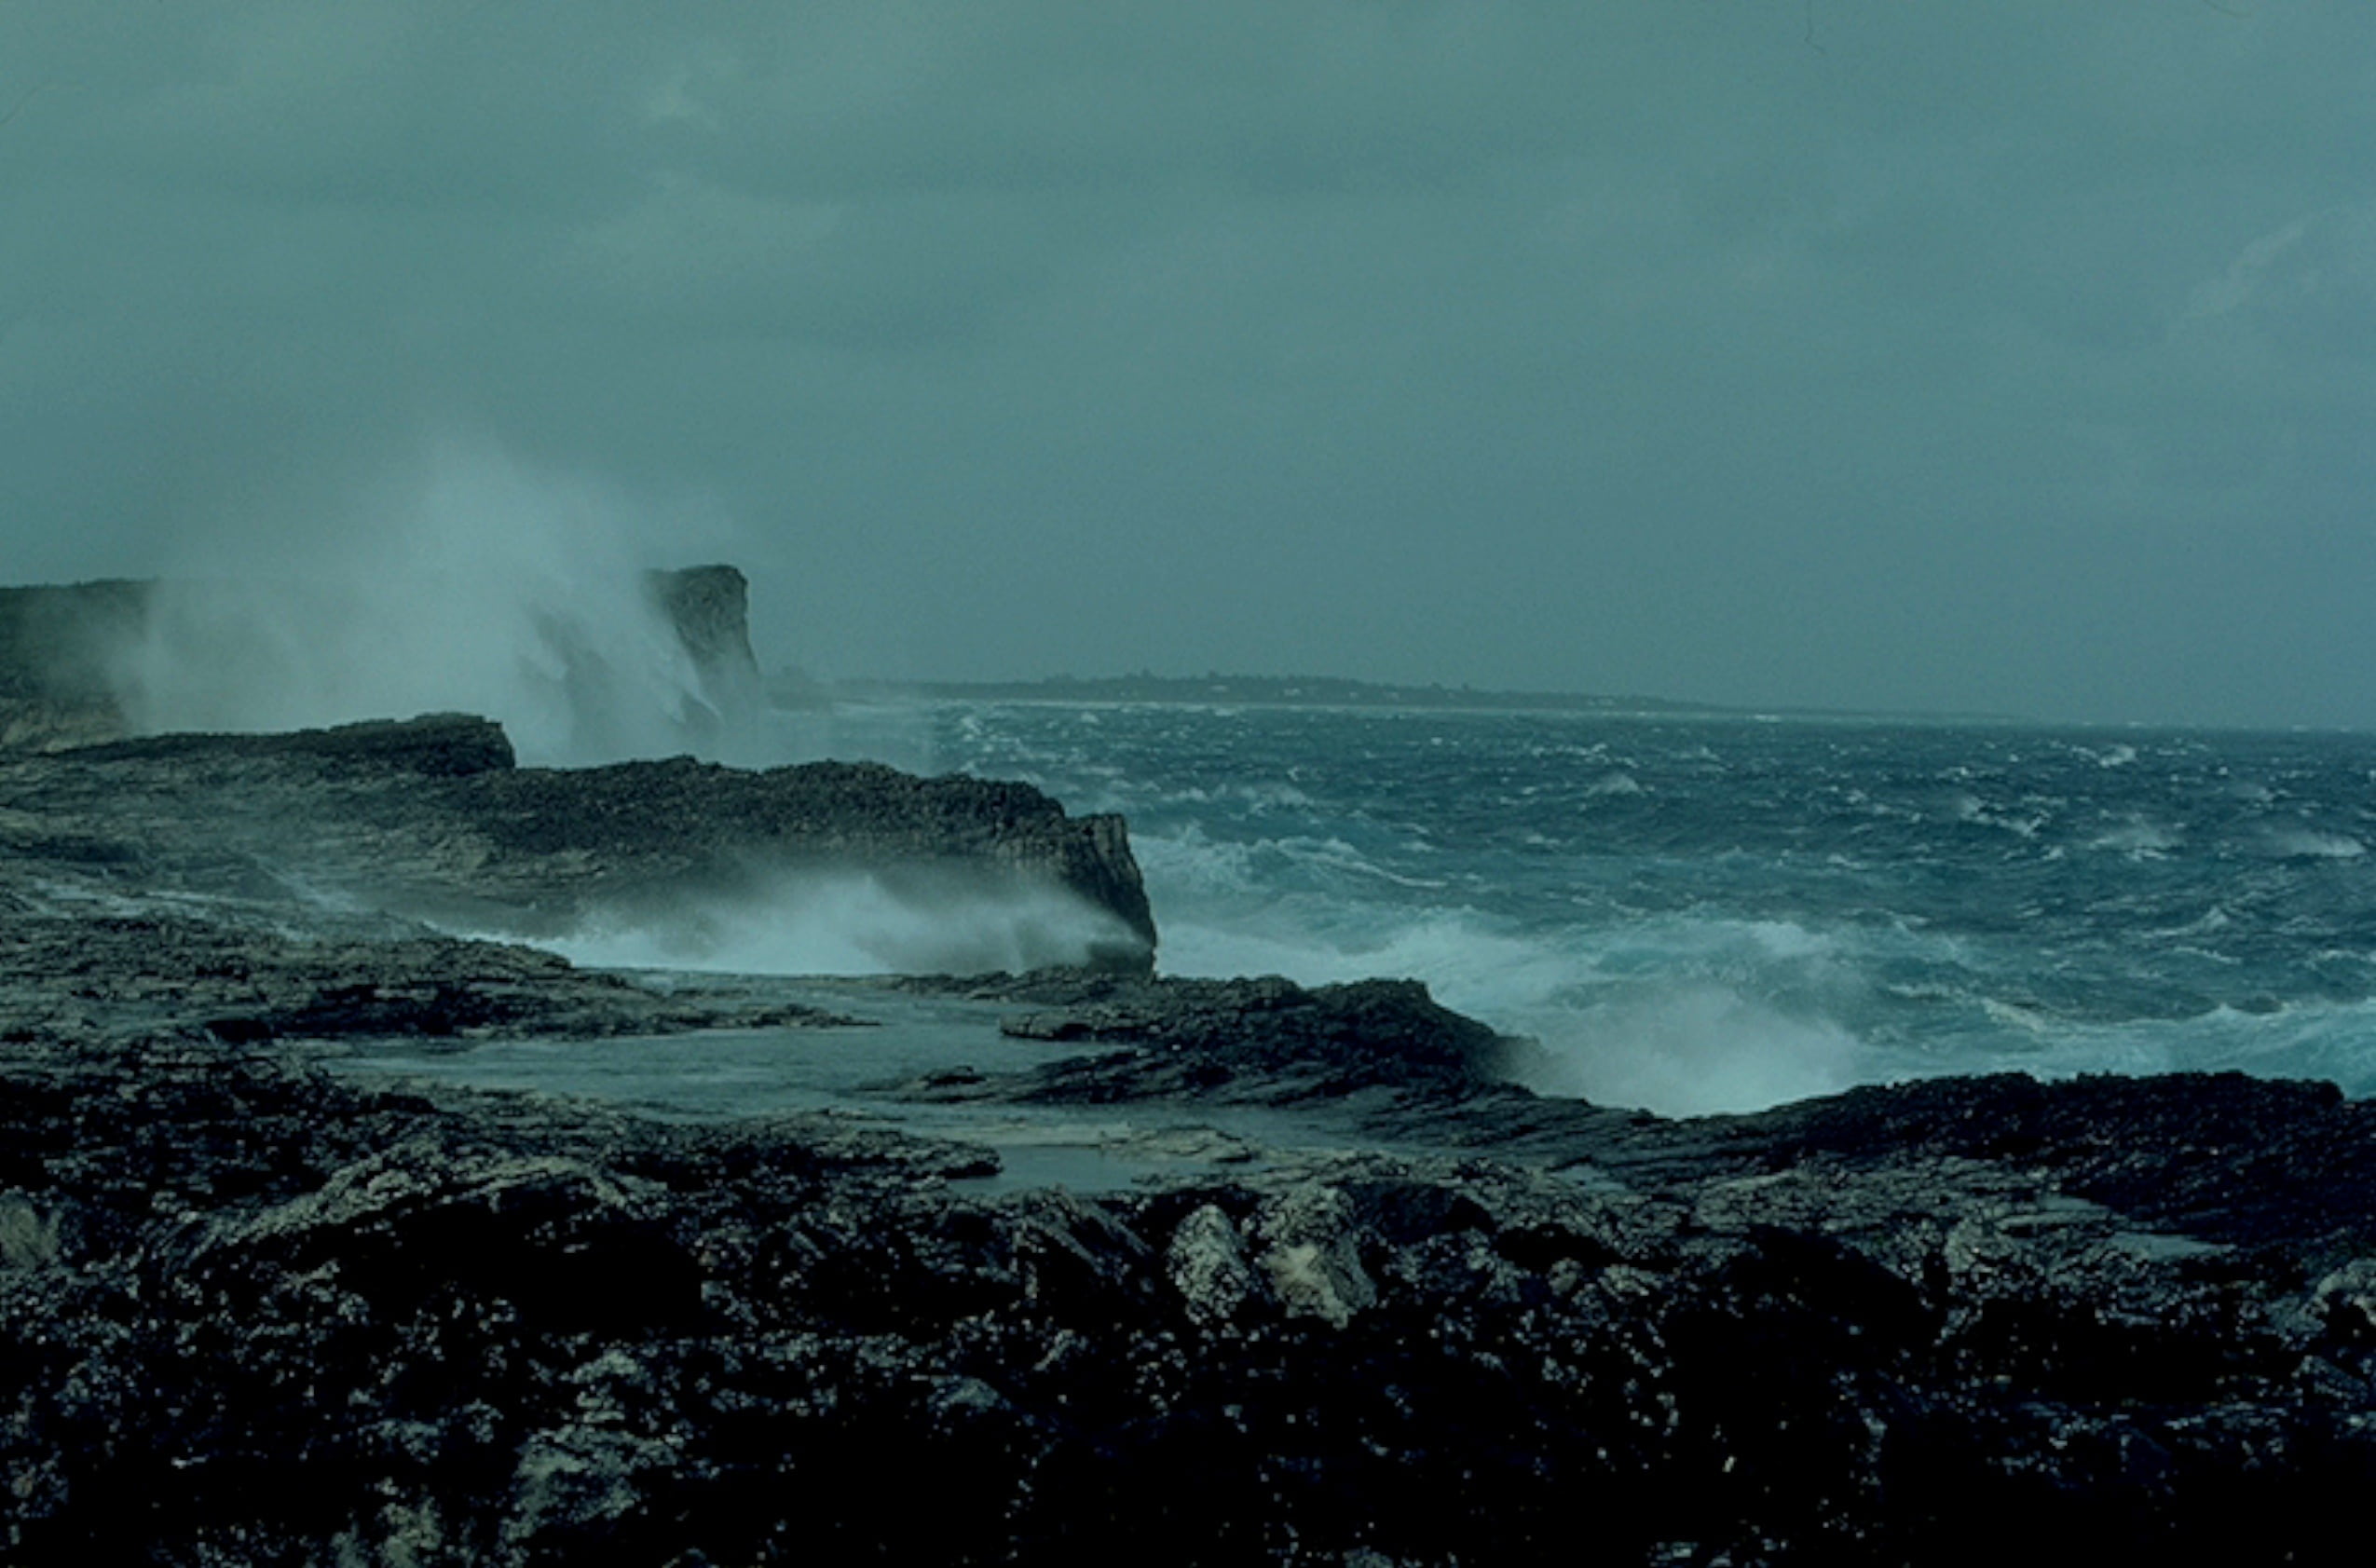 Далекий шторм. Охотское море шторм. Баренцево море шторм. Буря на море. Море в бурю.